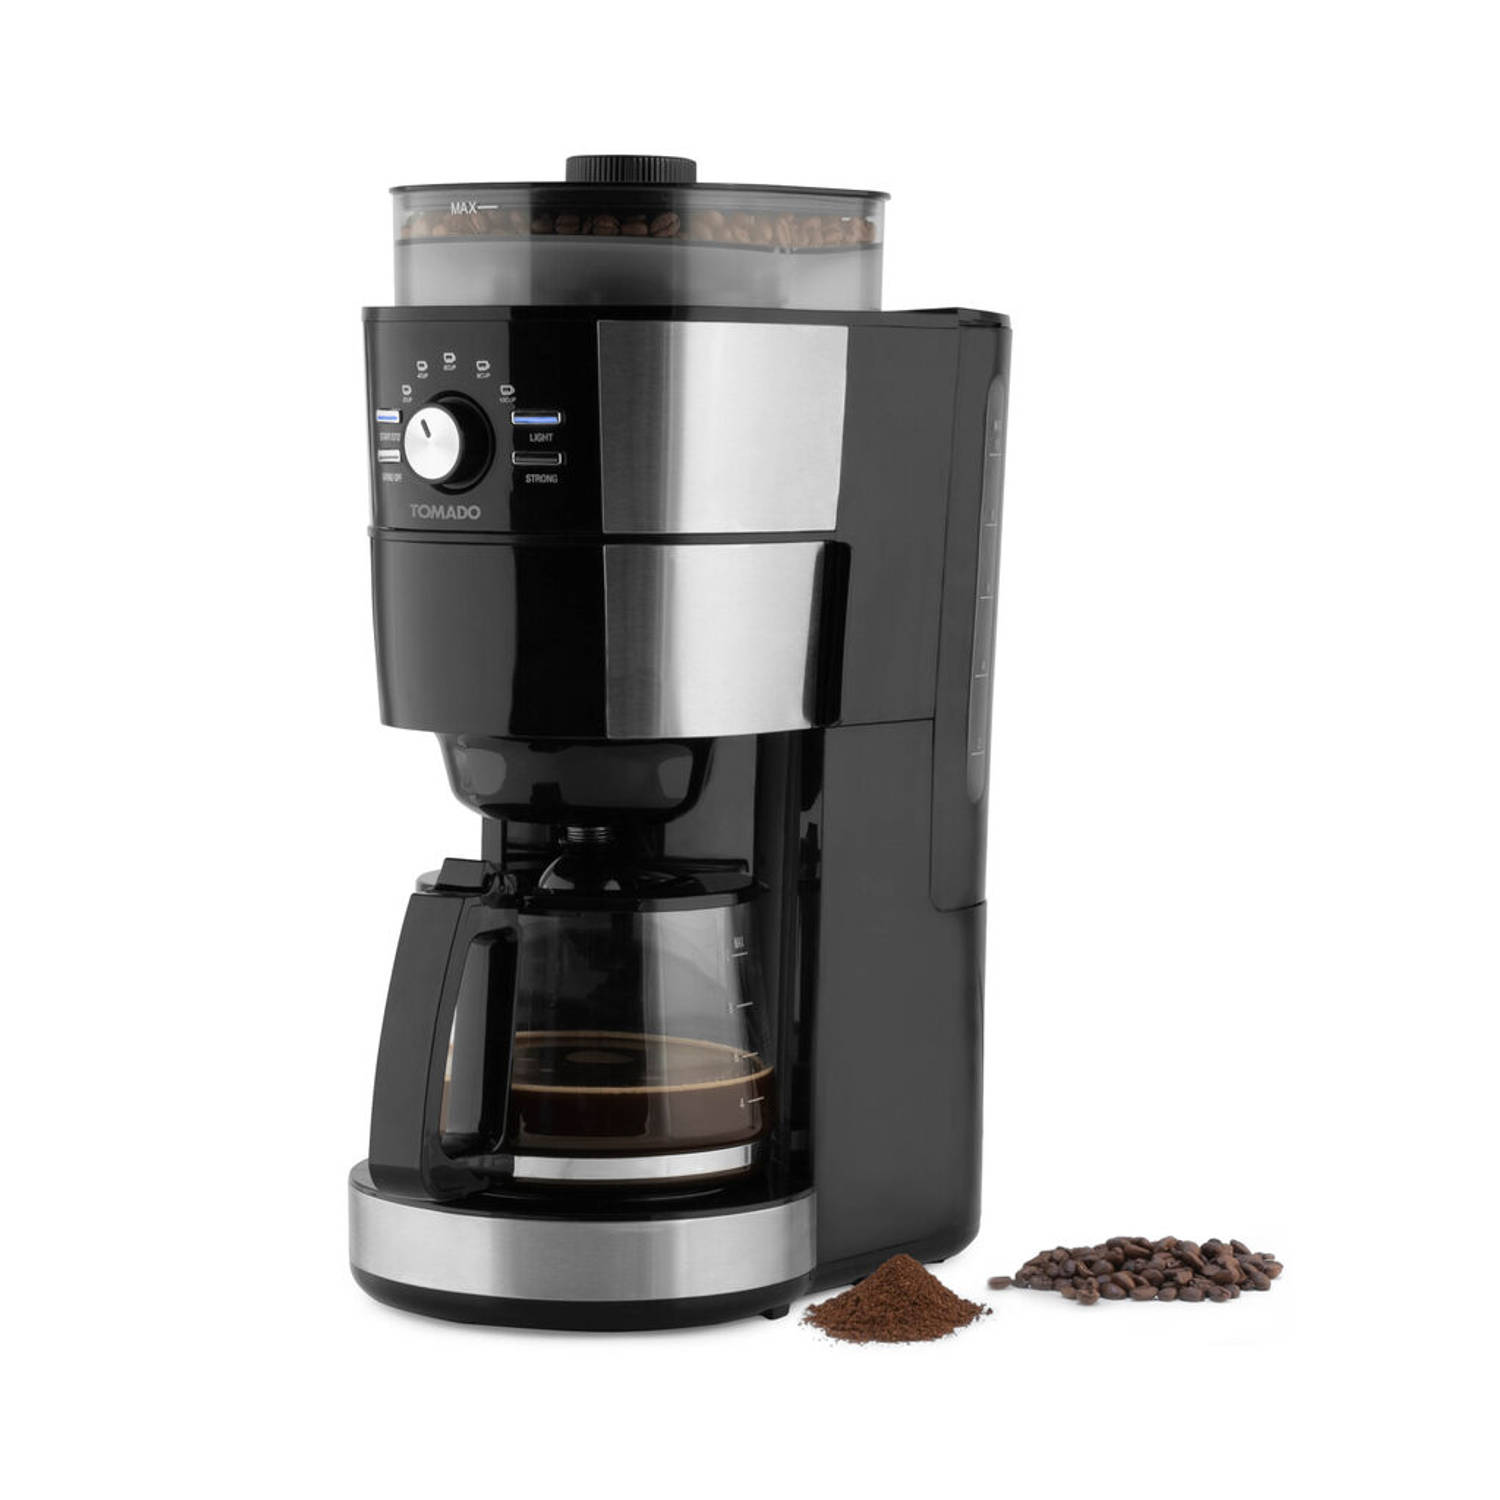 Tomado Tgb1301s Grind & Brew Koffiezetapparaat Filterkoffie Koffiebonen 1.25 L Inhoud Zwart-rvs